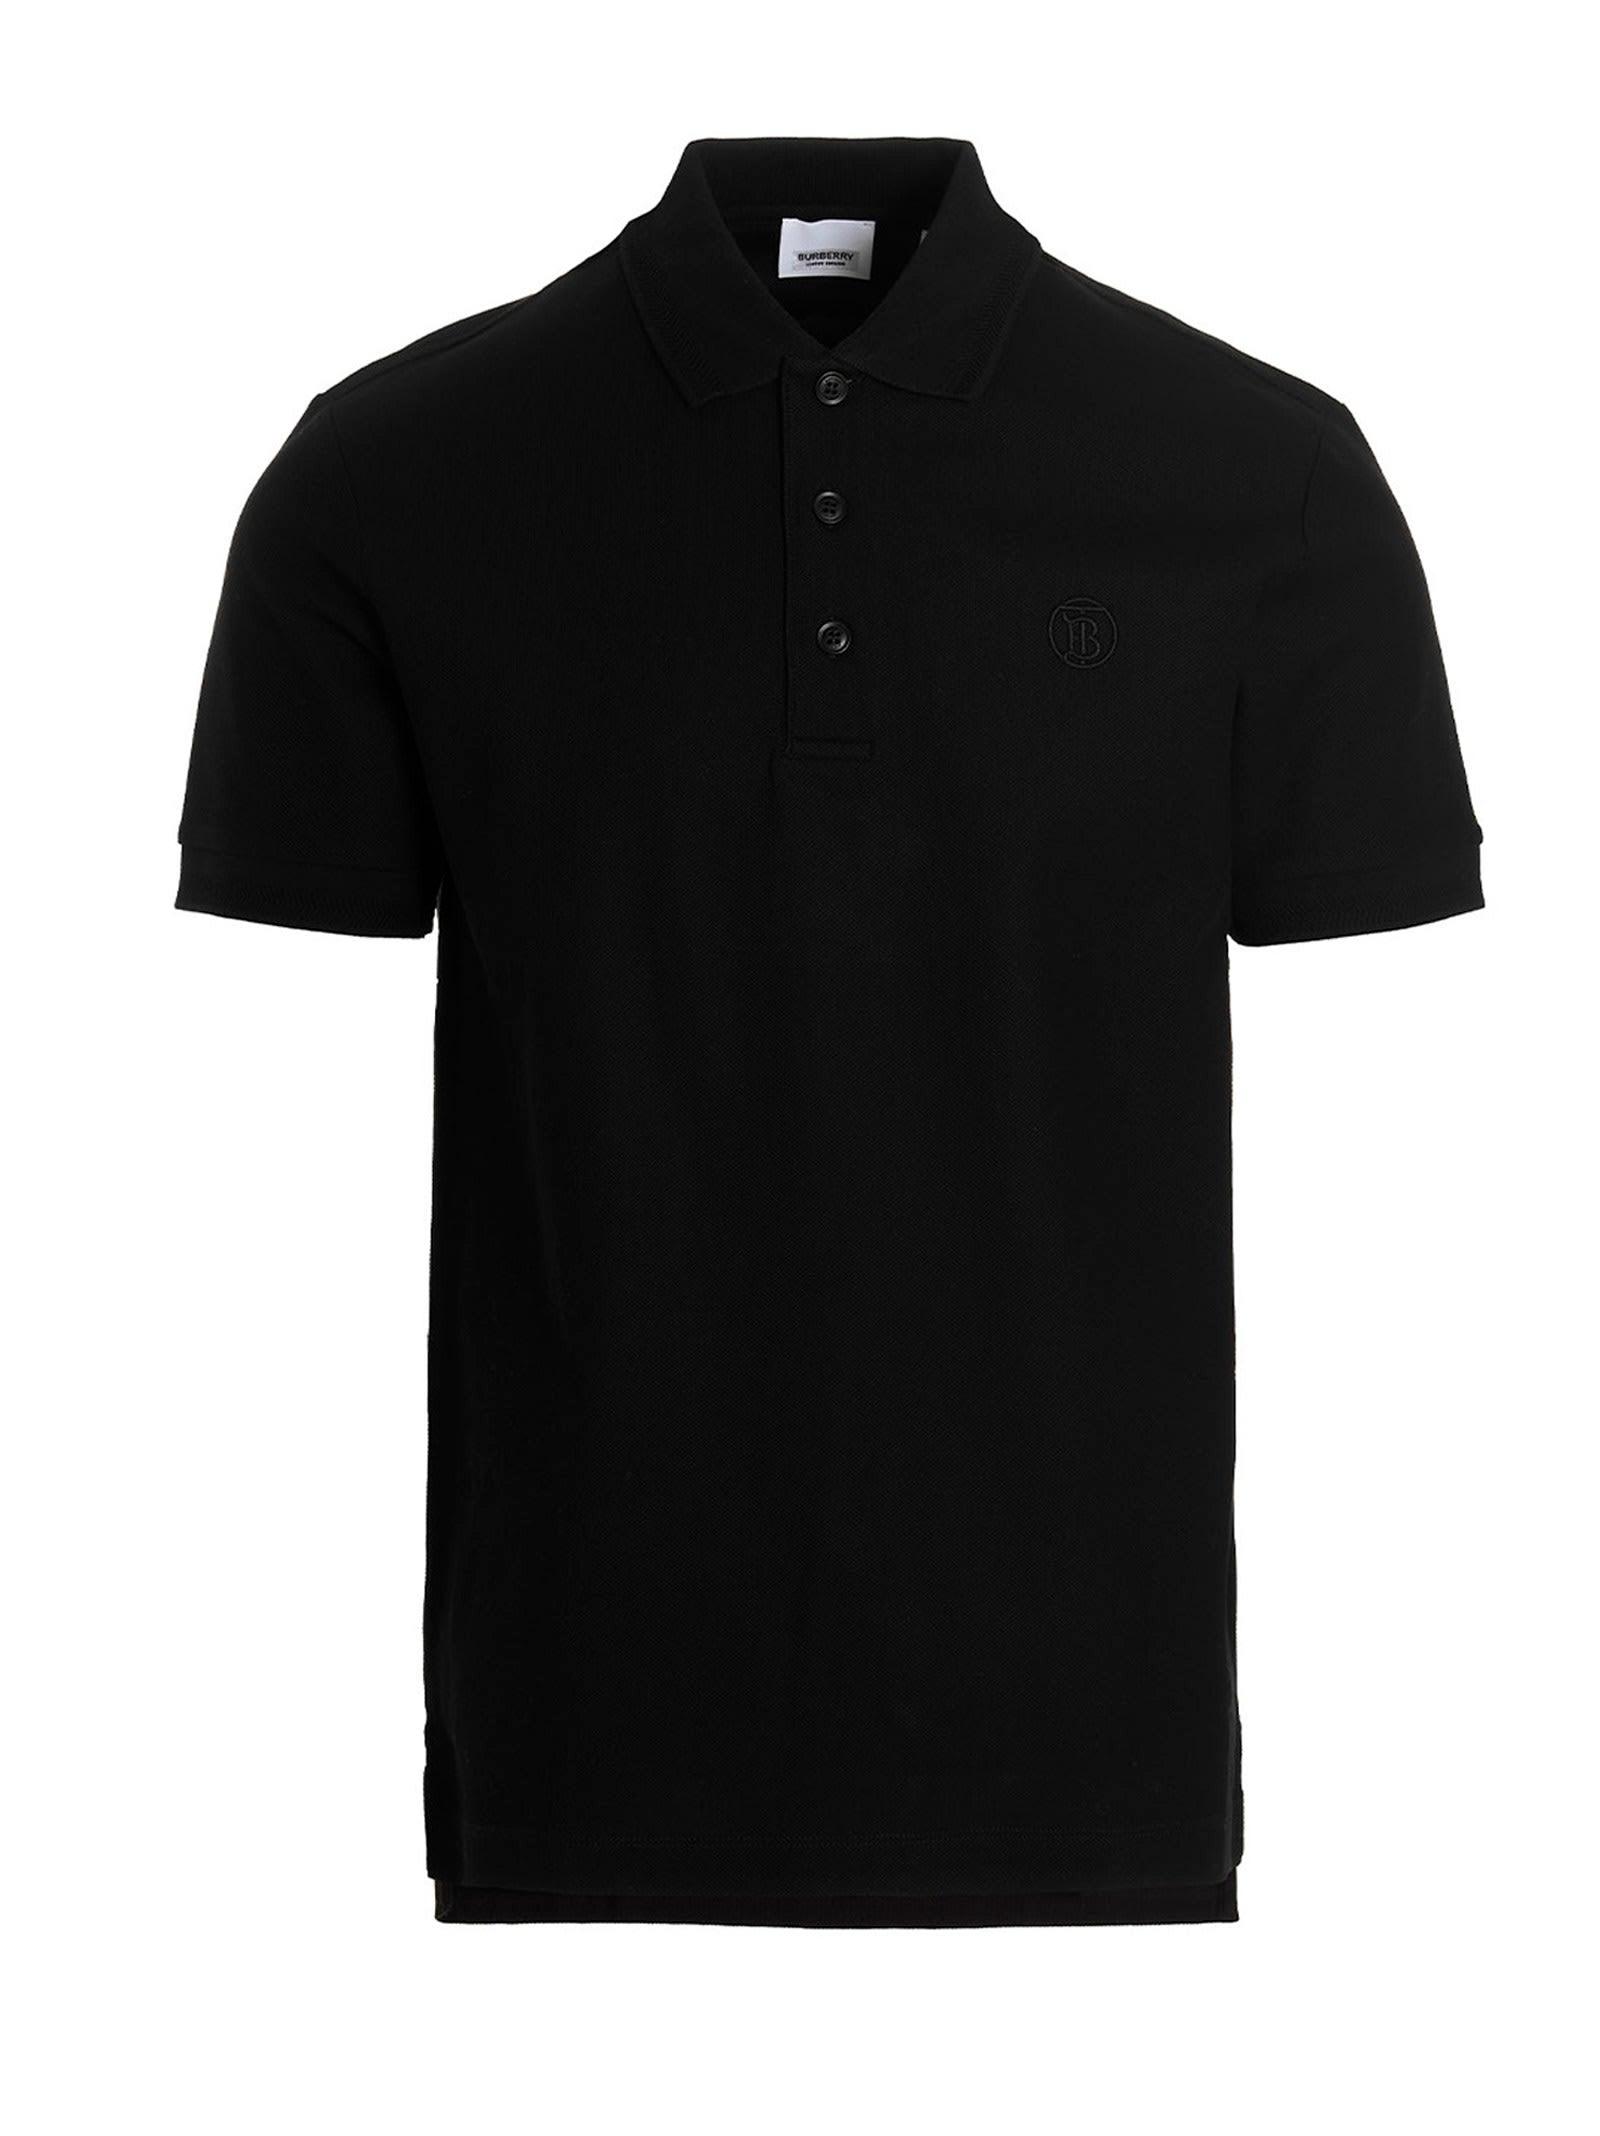 Burberry Eddie Polo Shirt in Black for Men | Lyst